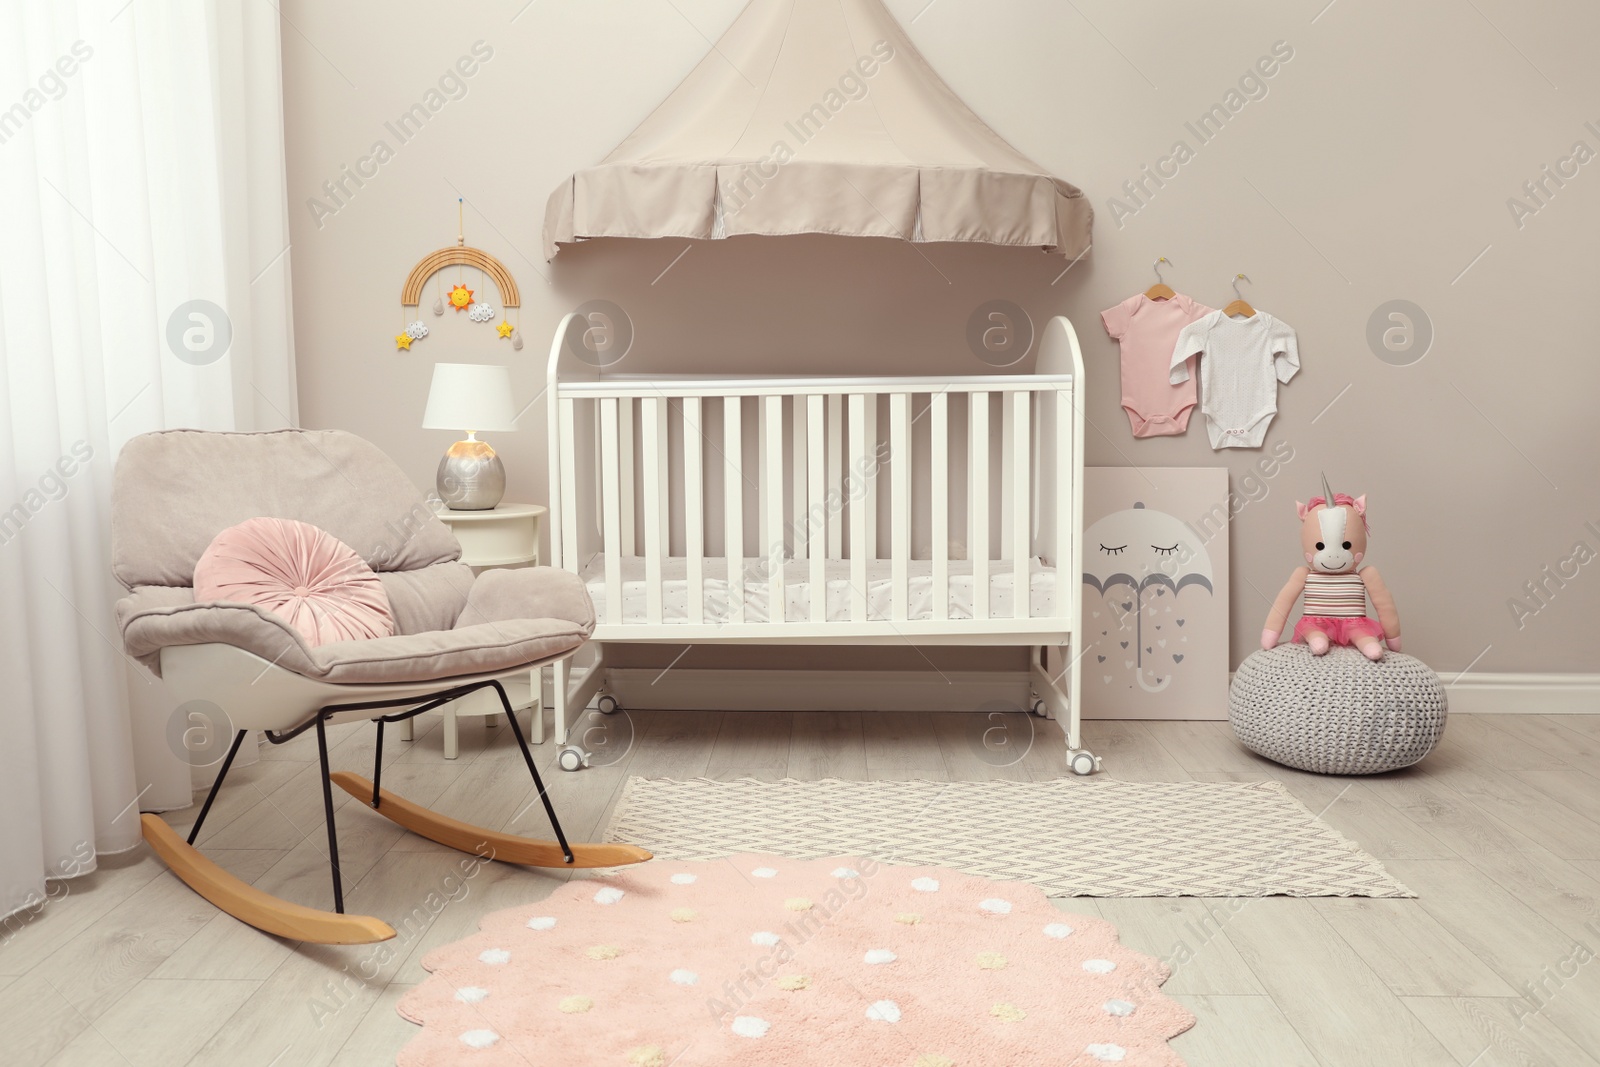 Photo of Modern baby room interior with stylish crib